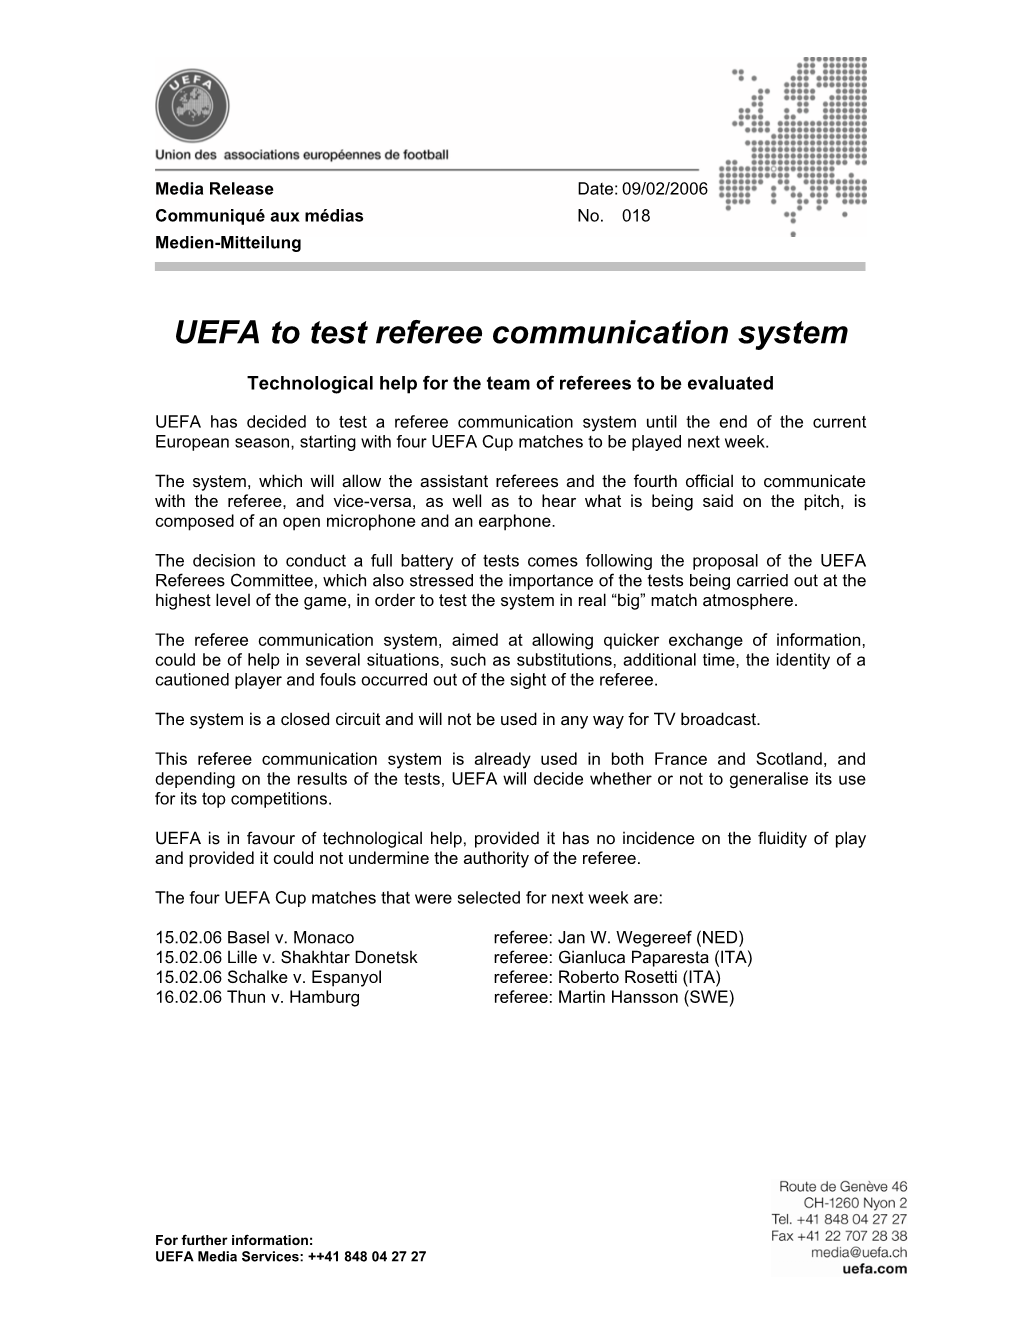 UEFA to Test Referee Communication System